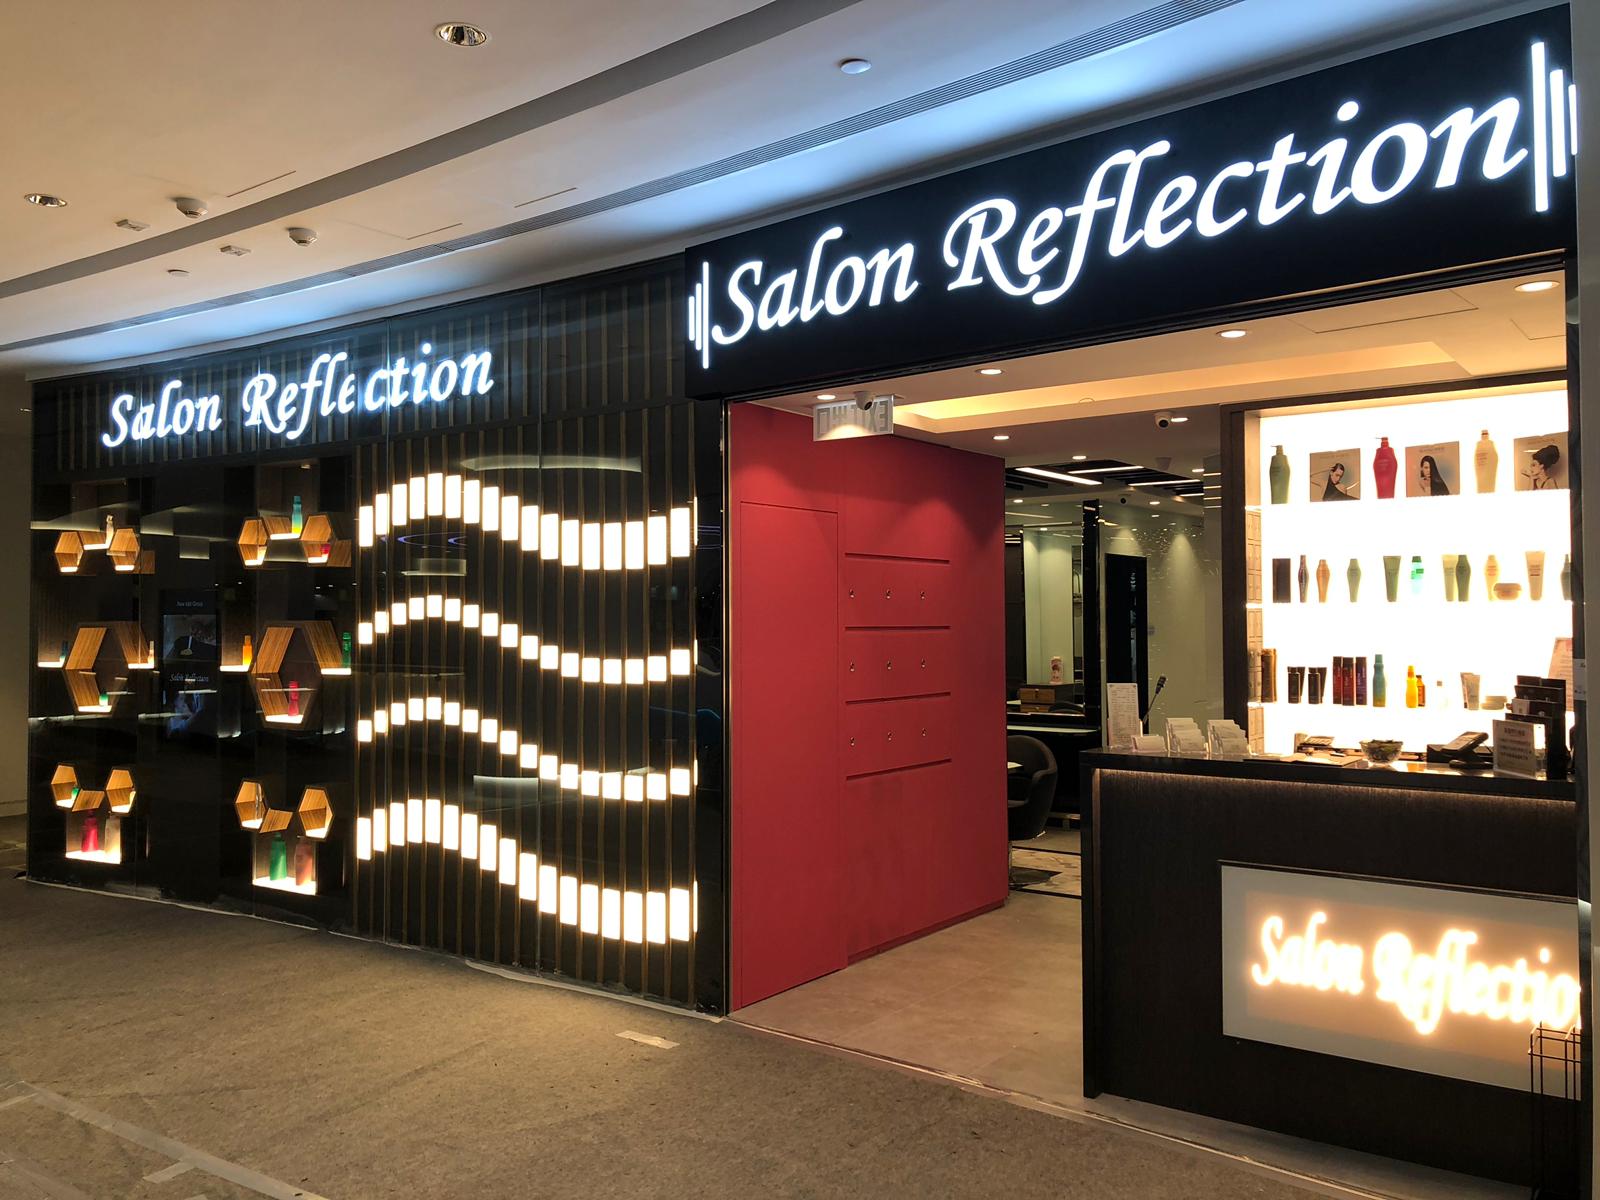 Electric hair: Salon Reflection